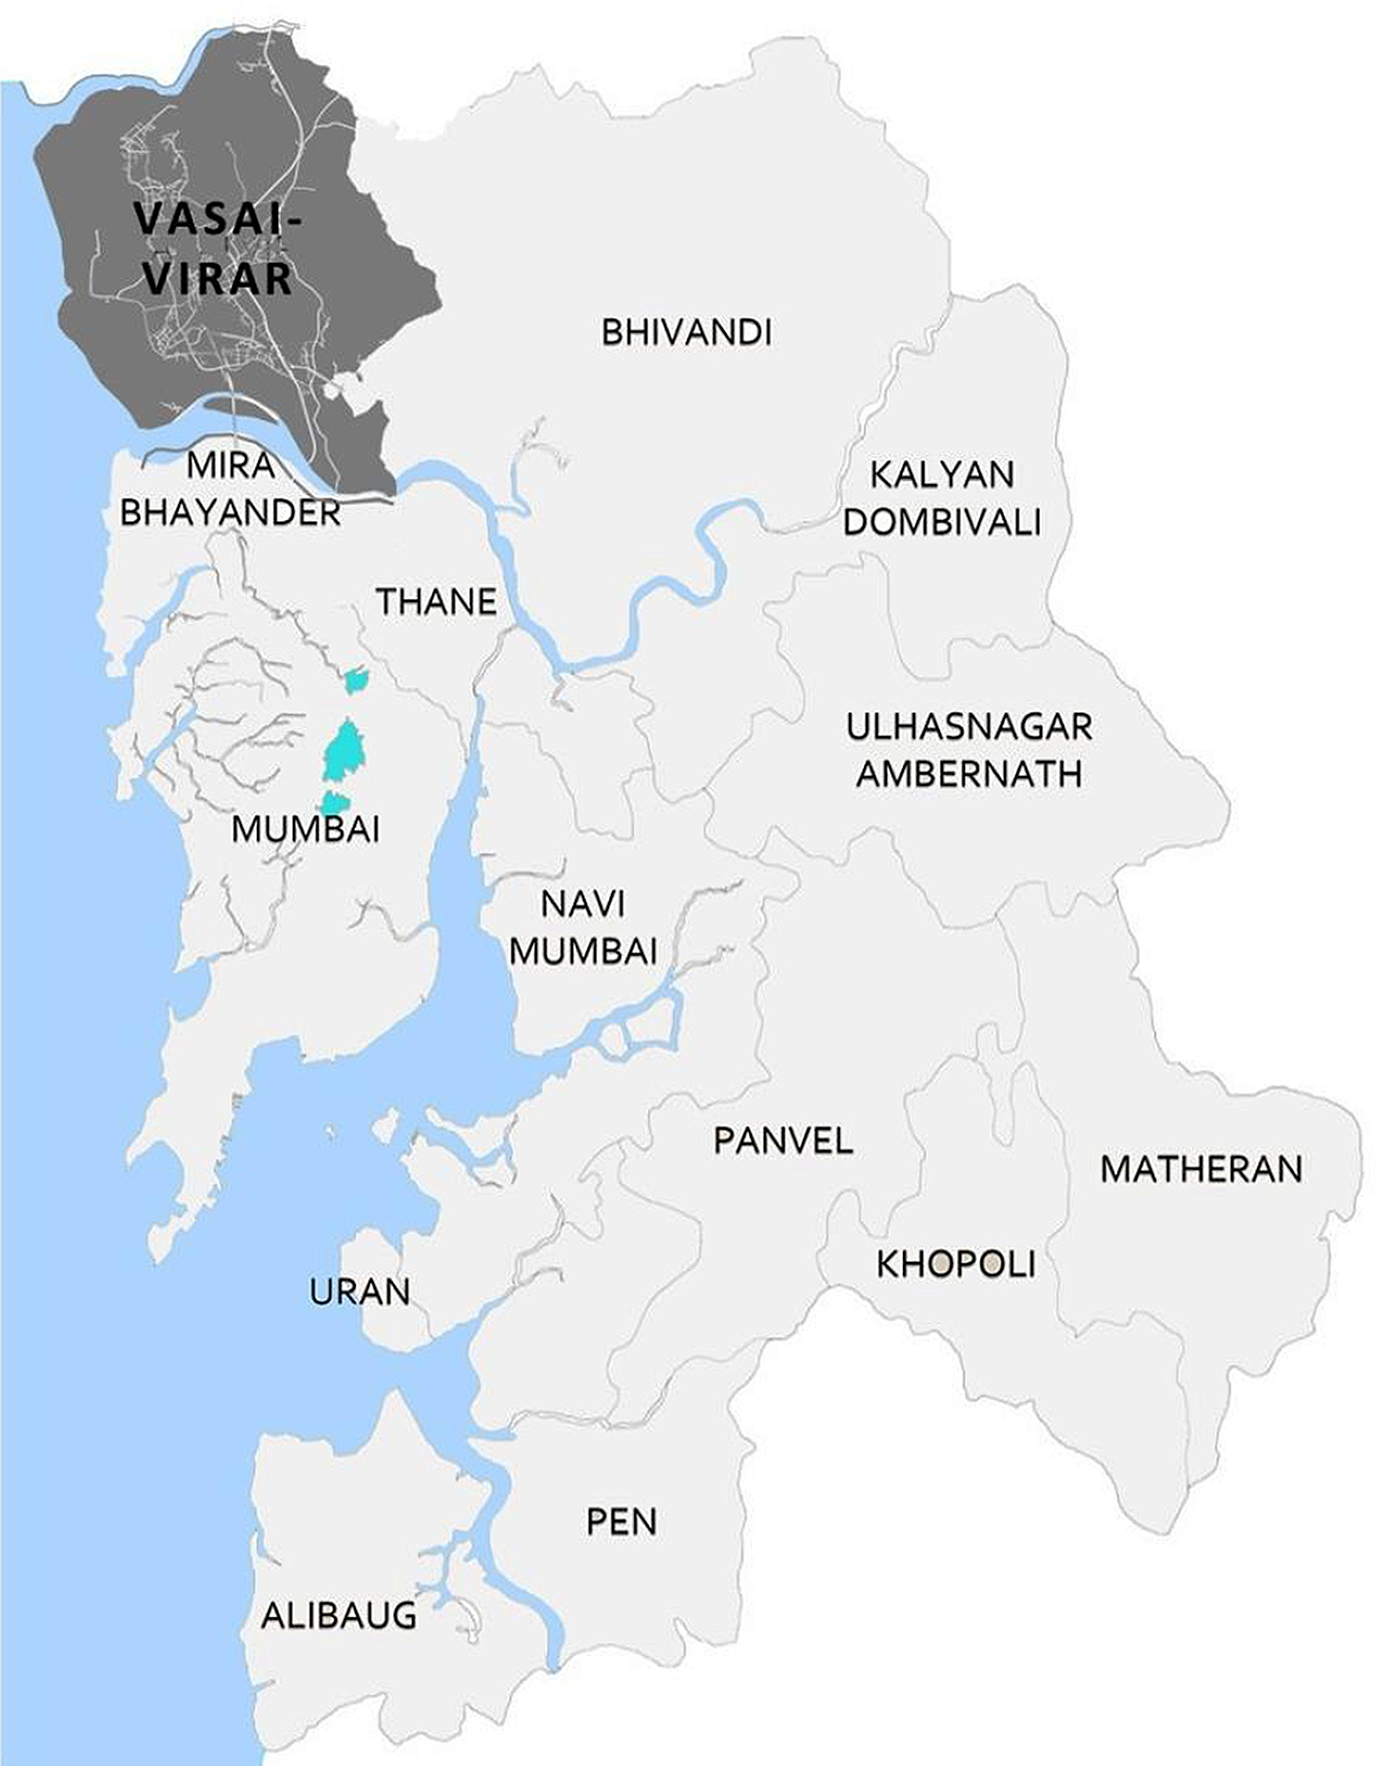 Vasai-Virar – Local Information